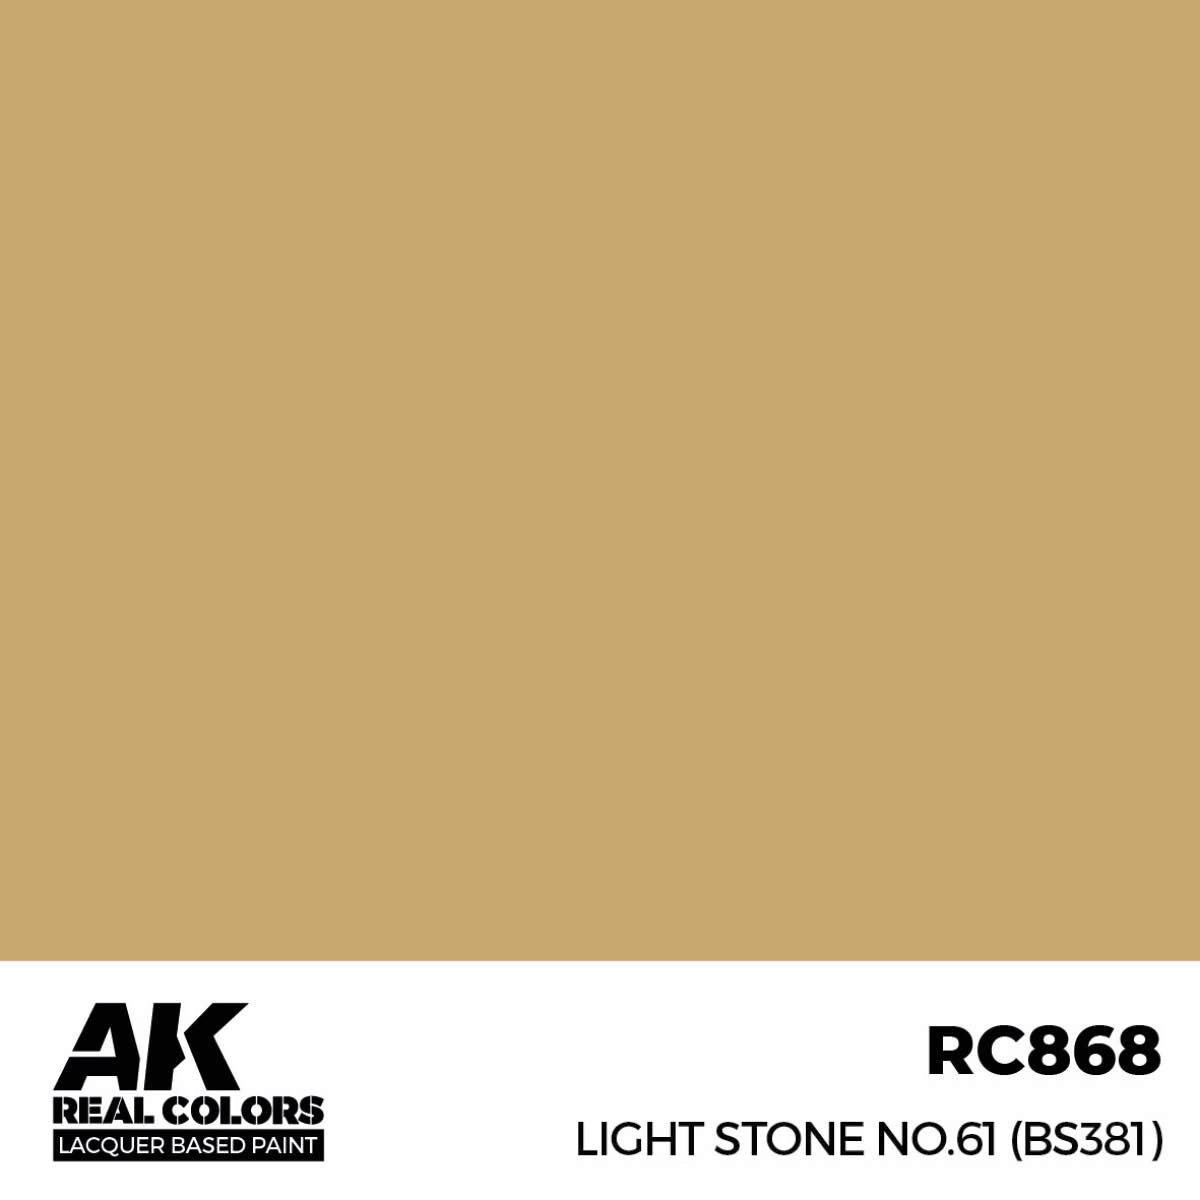 AK RC868 Real Colors Light Stone No.61 (BS381) 17 ml.